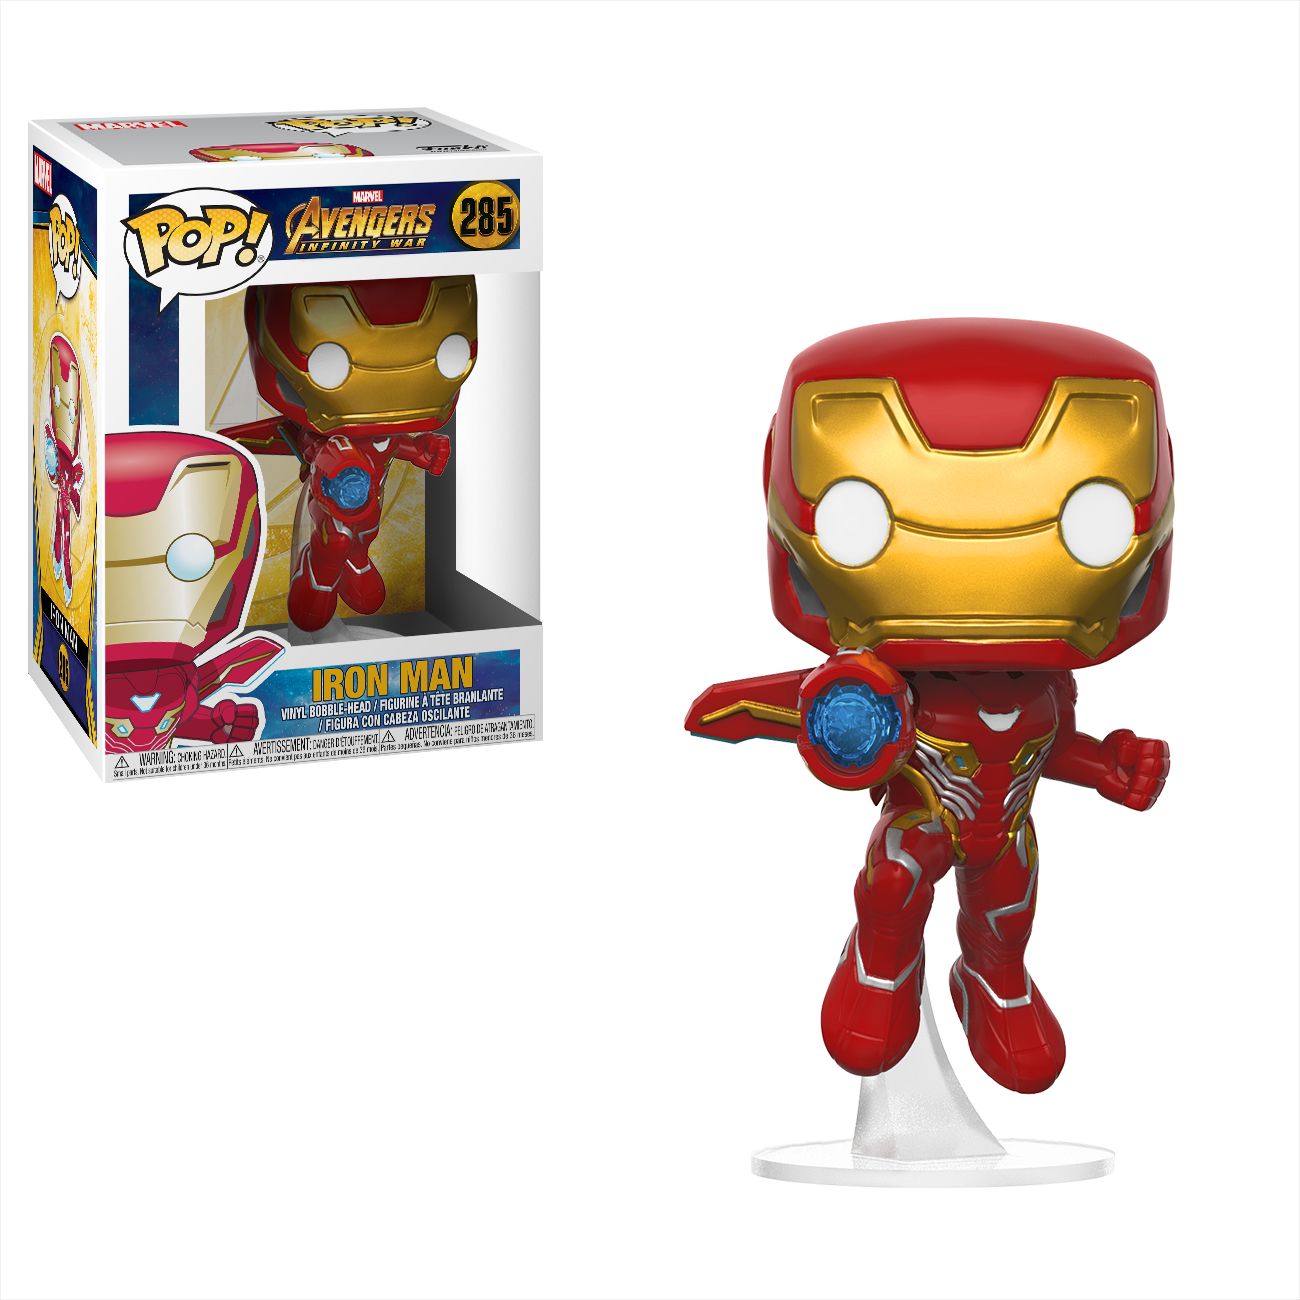 Pop marvel: avengers infinity war - iron man - Avengers